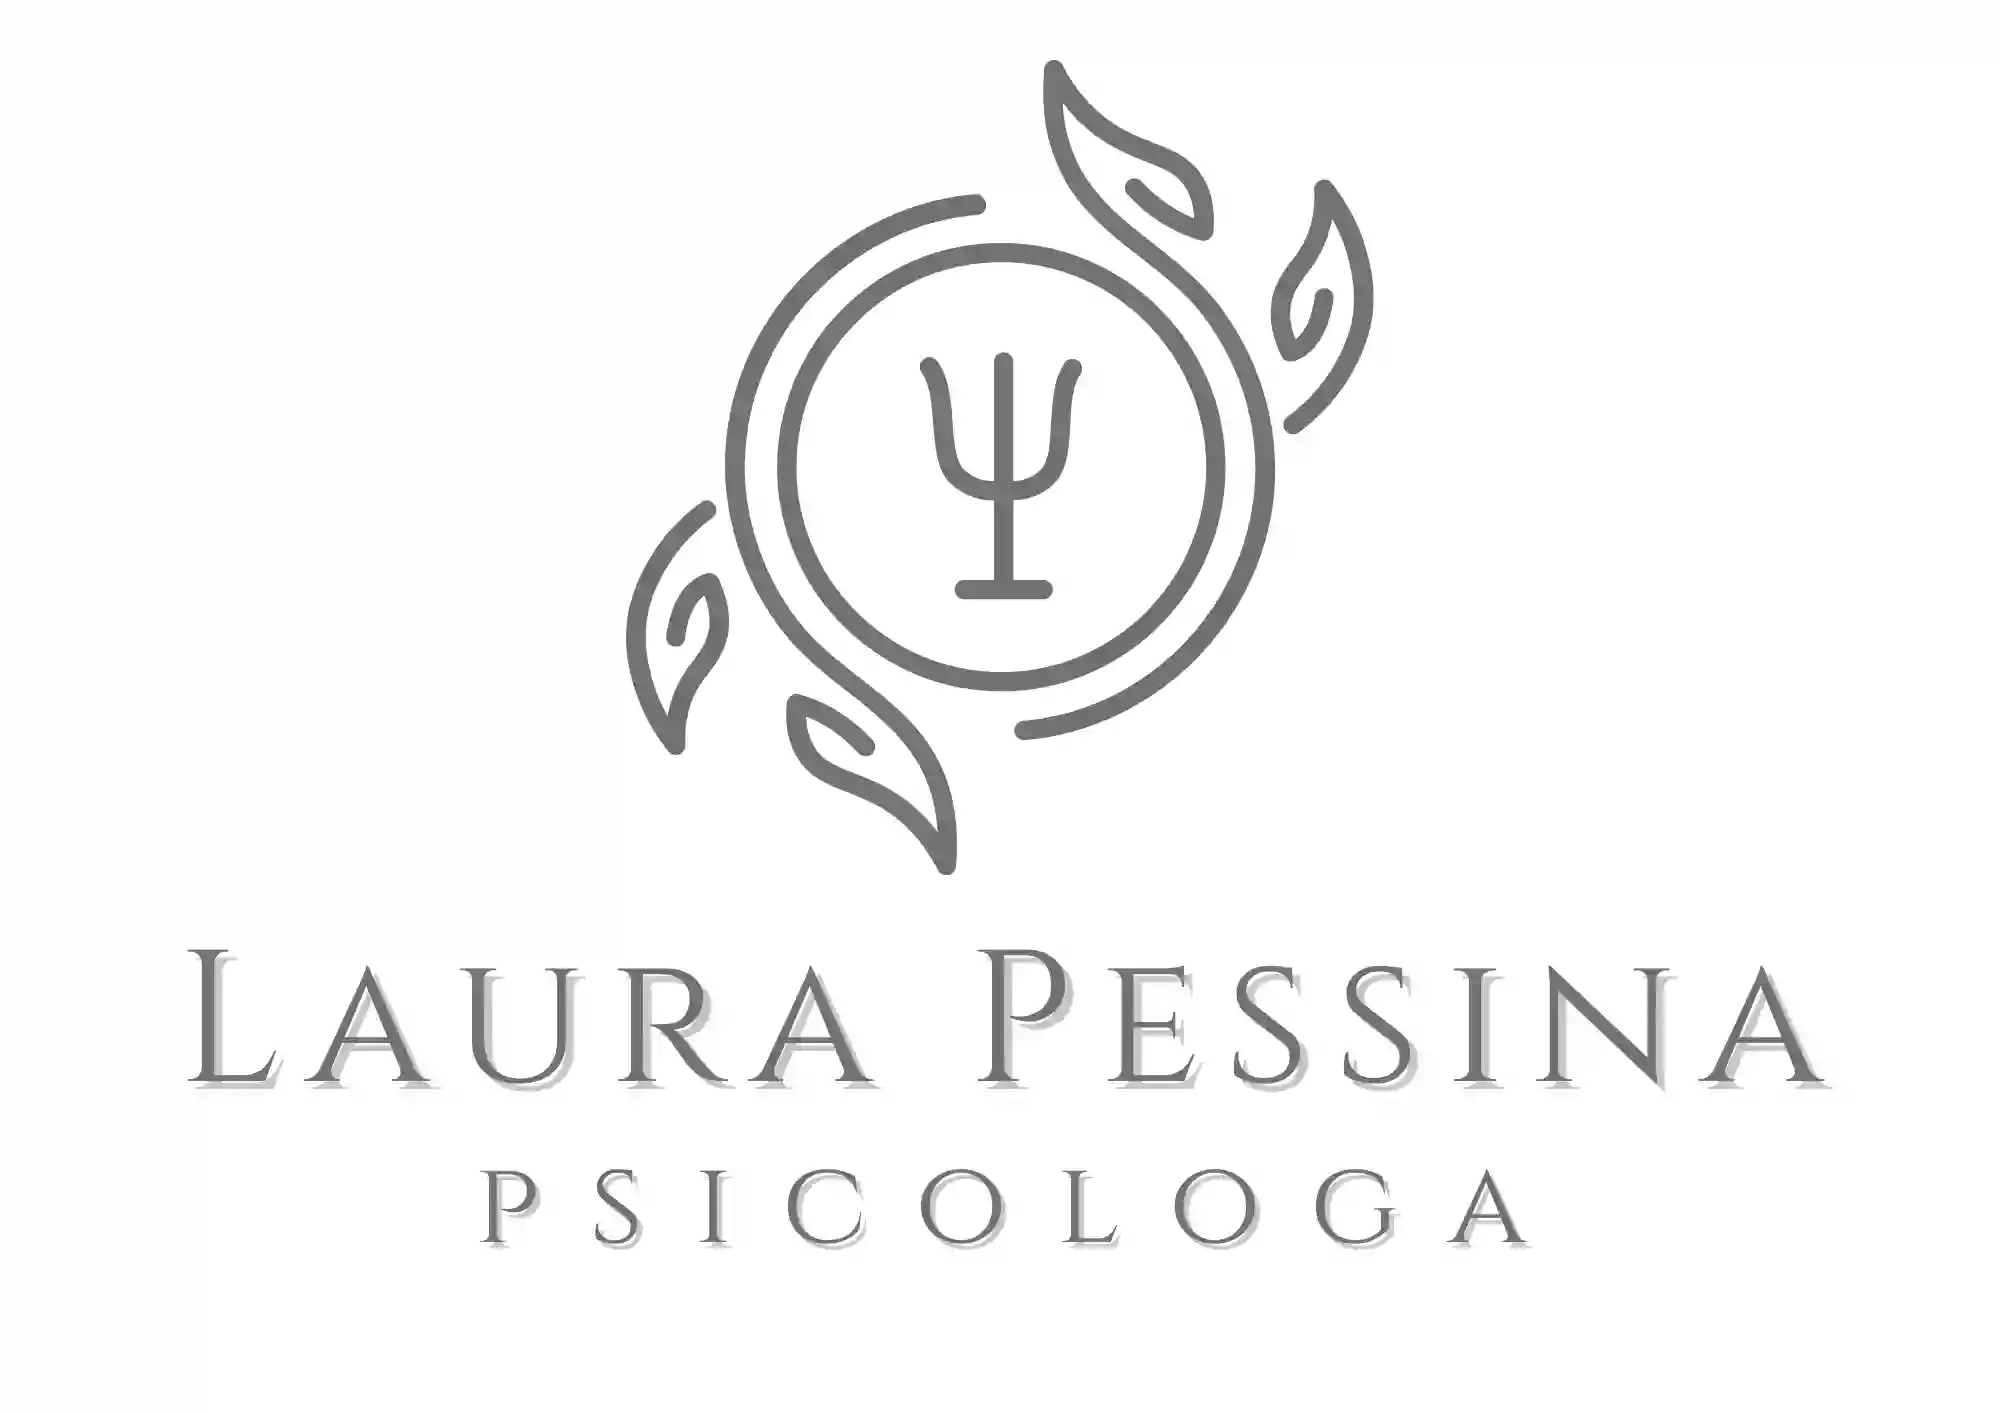 Laura Pessina Psicologa